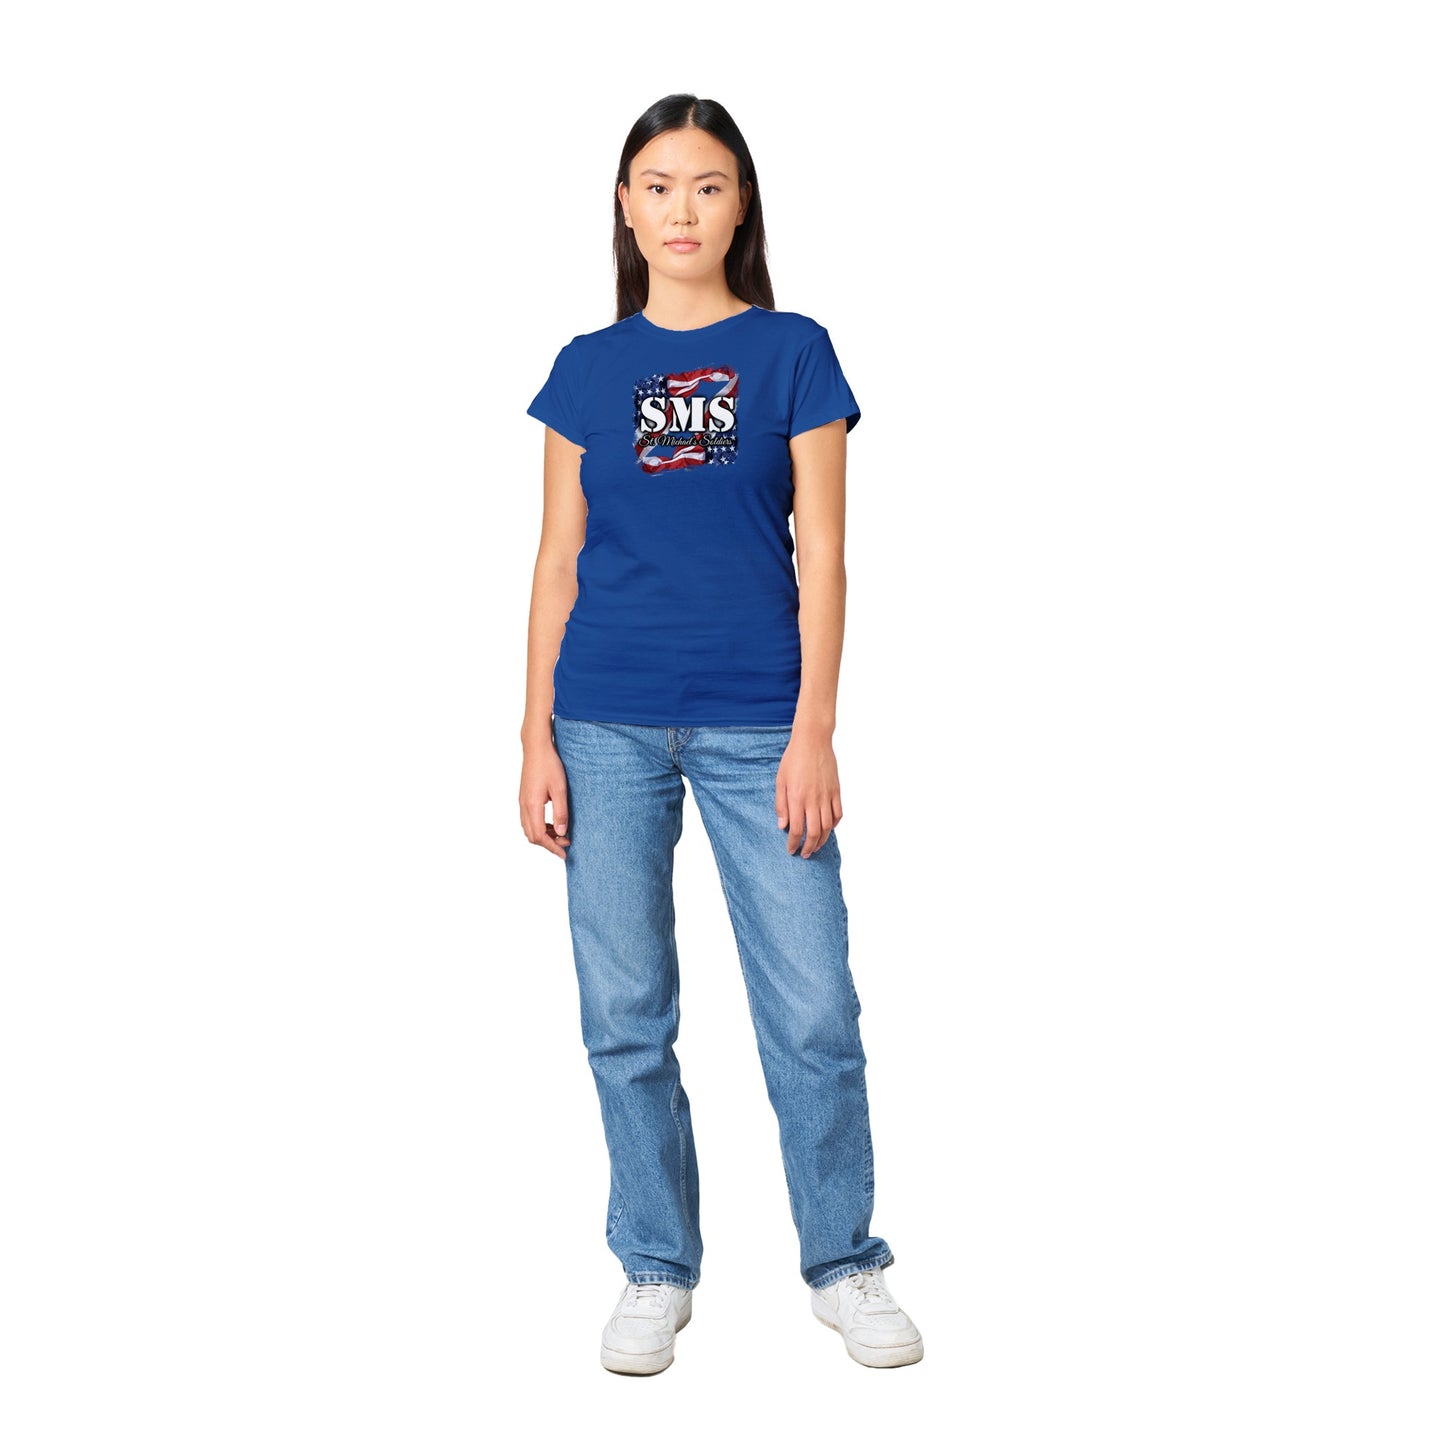 SMS (Flag1) - Classic Womens Crewneck T-shirt